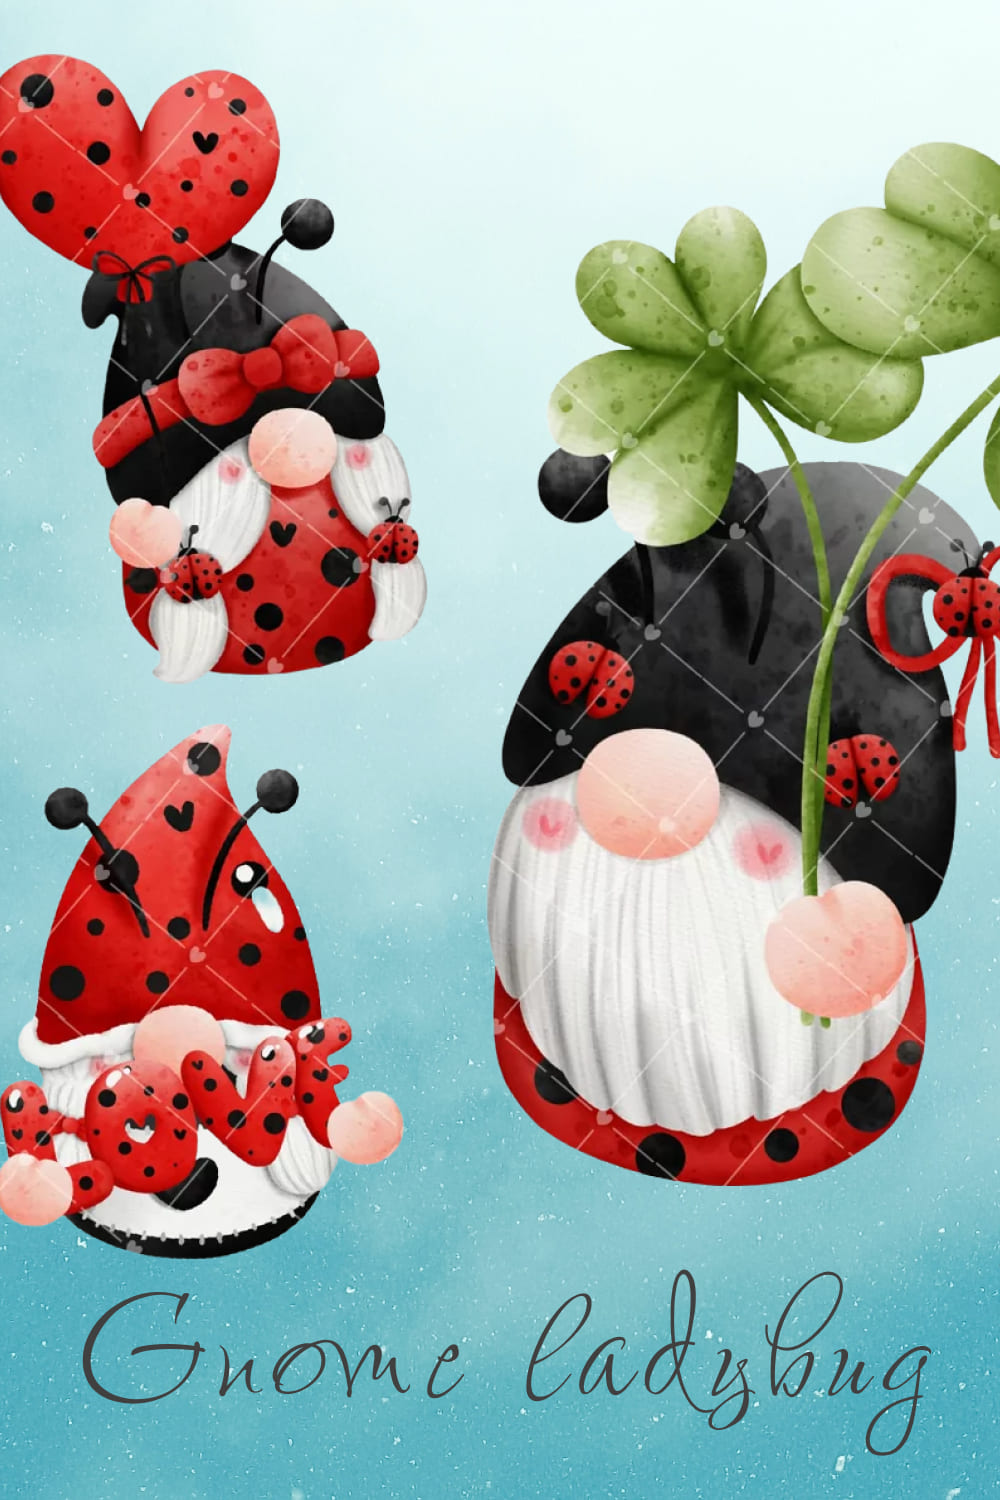 Gnome ladybug - pinterest image preview.